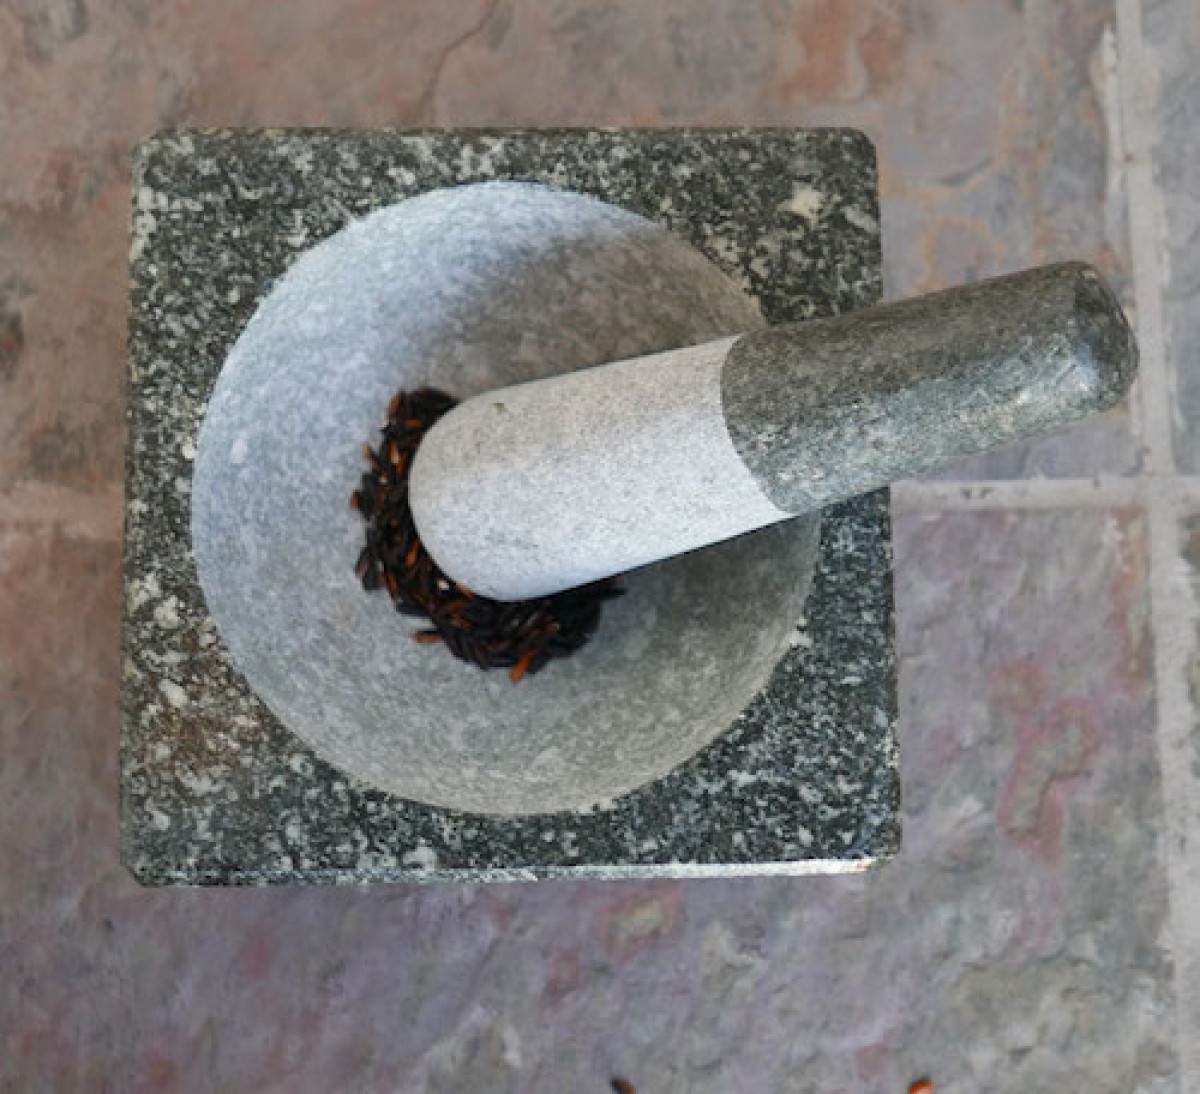 7 Inch Thai Granite Mortar and Pestle - ImportFood